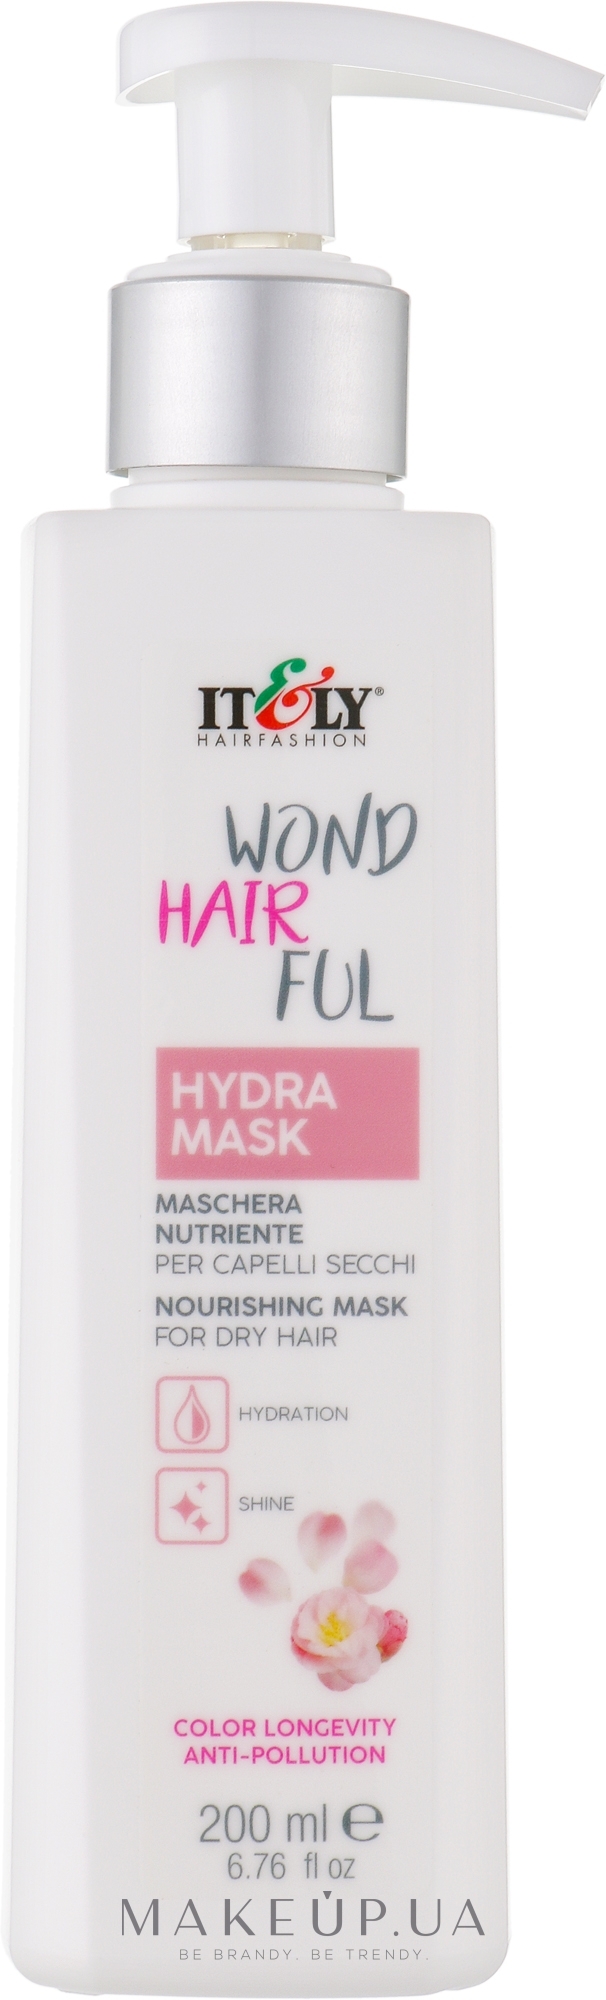 Живильна маска для волосся - Itely Hairfashion WondHairFul Hydra Mask — фото 200ml